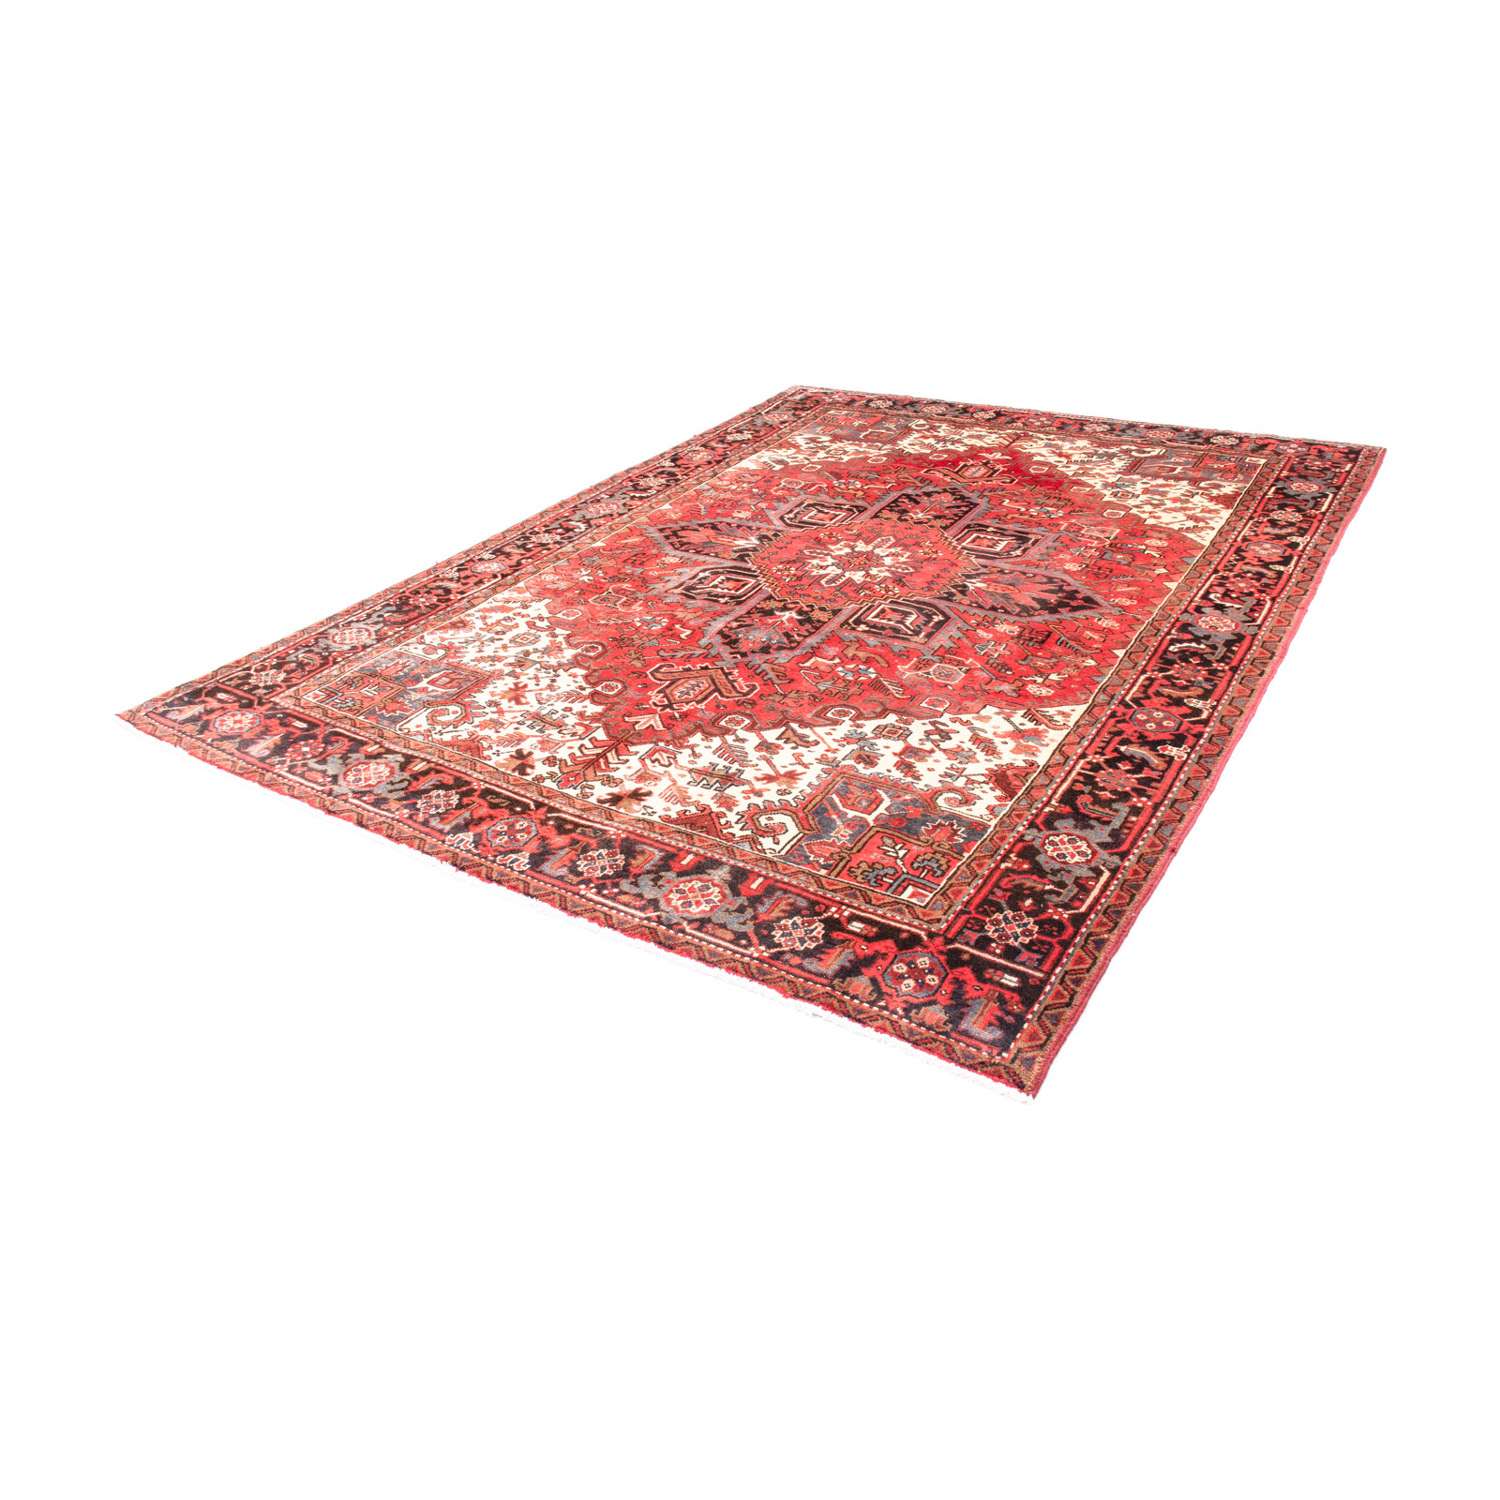 Persisk matta - Nomadic - 300 x 215 cm - röd